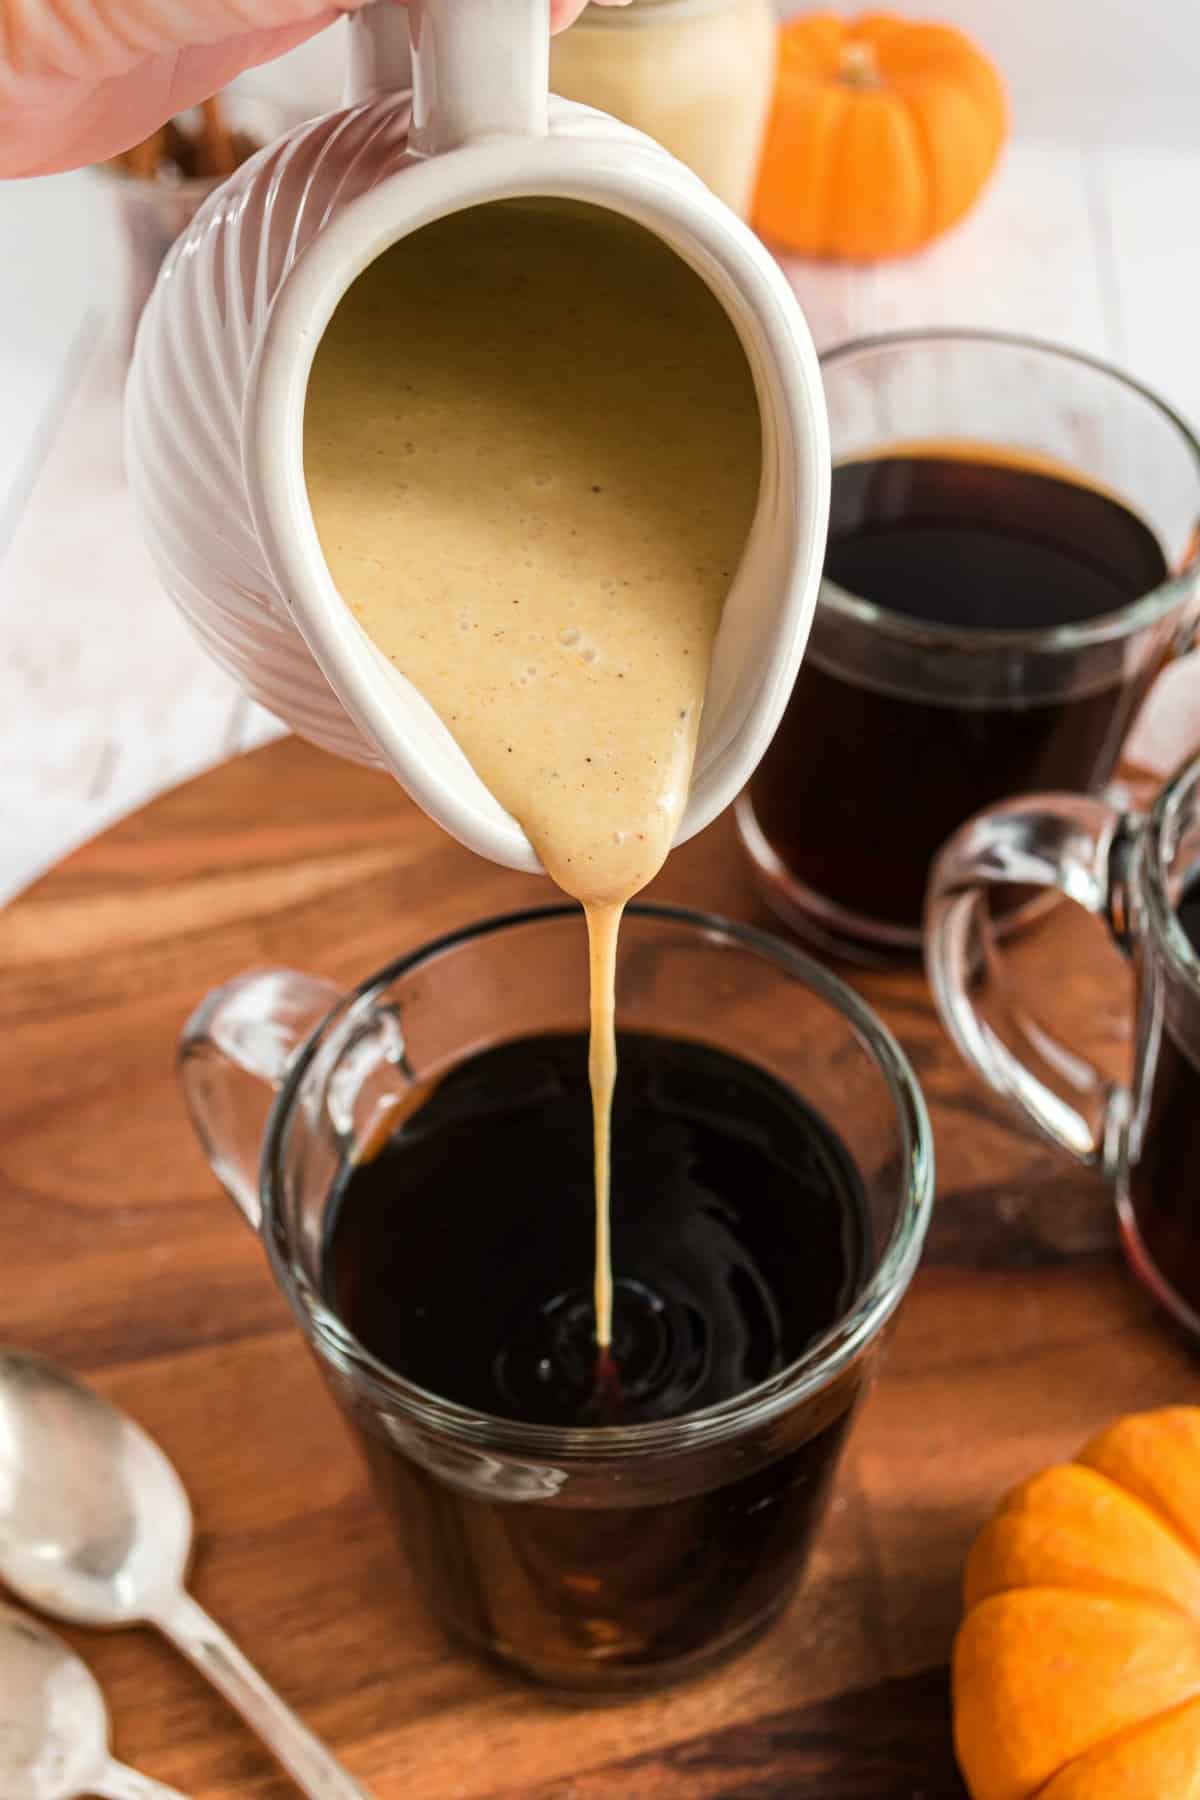 Pumpkin coffee creamer being poured into a mug of hot, black coffee.